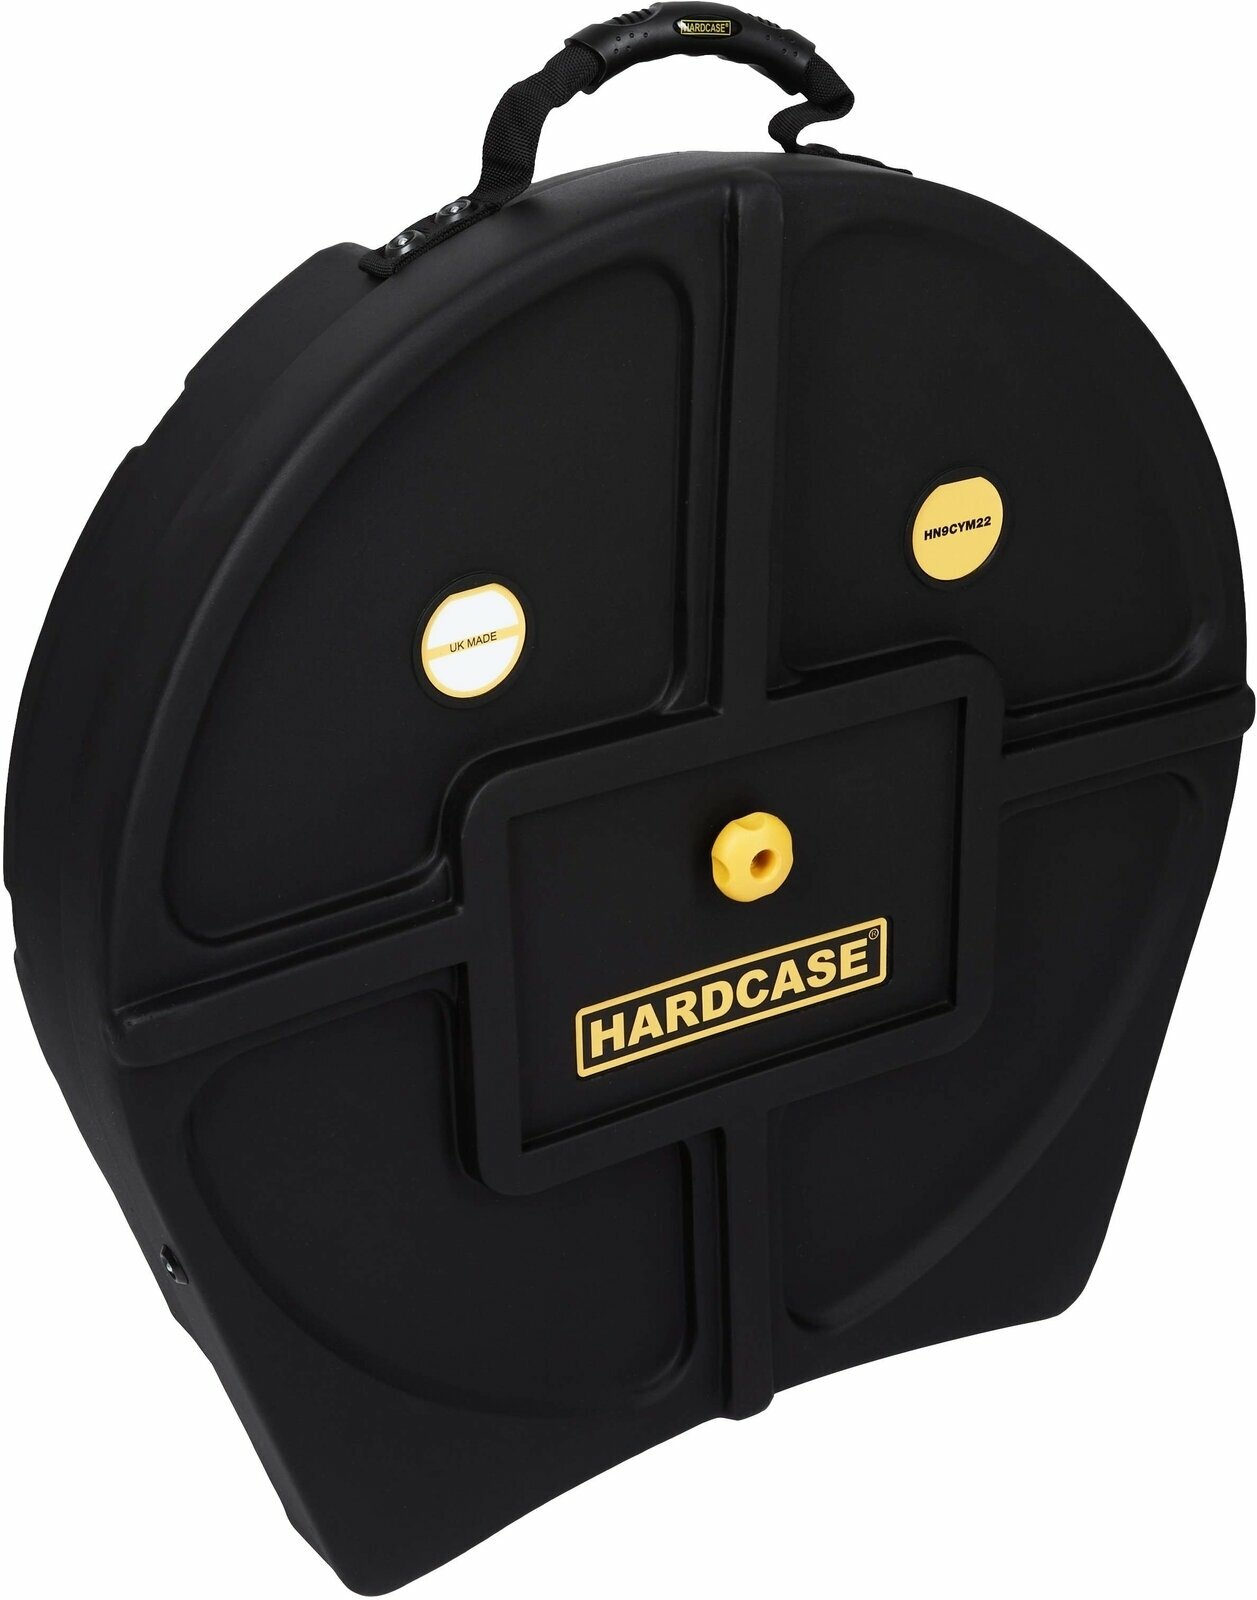 Cymbal Bag Hardcase HN9CYM22 Cymbal Bag